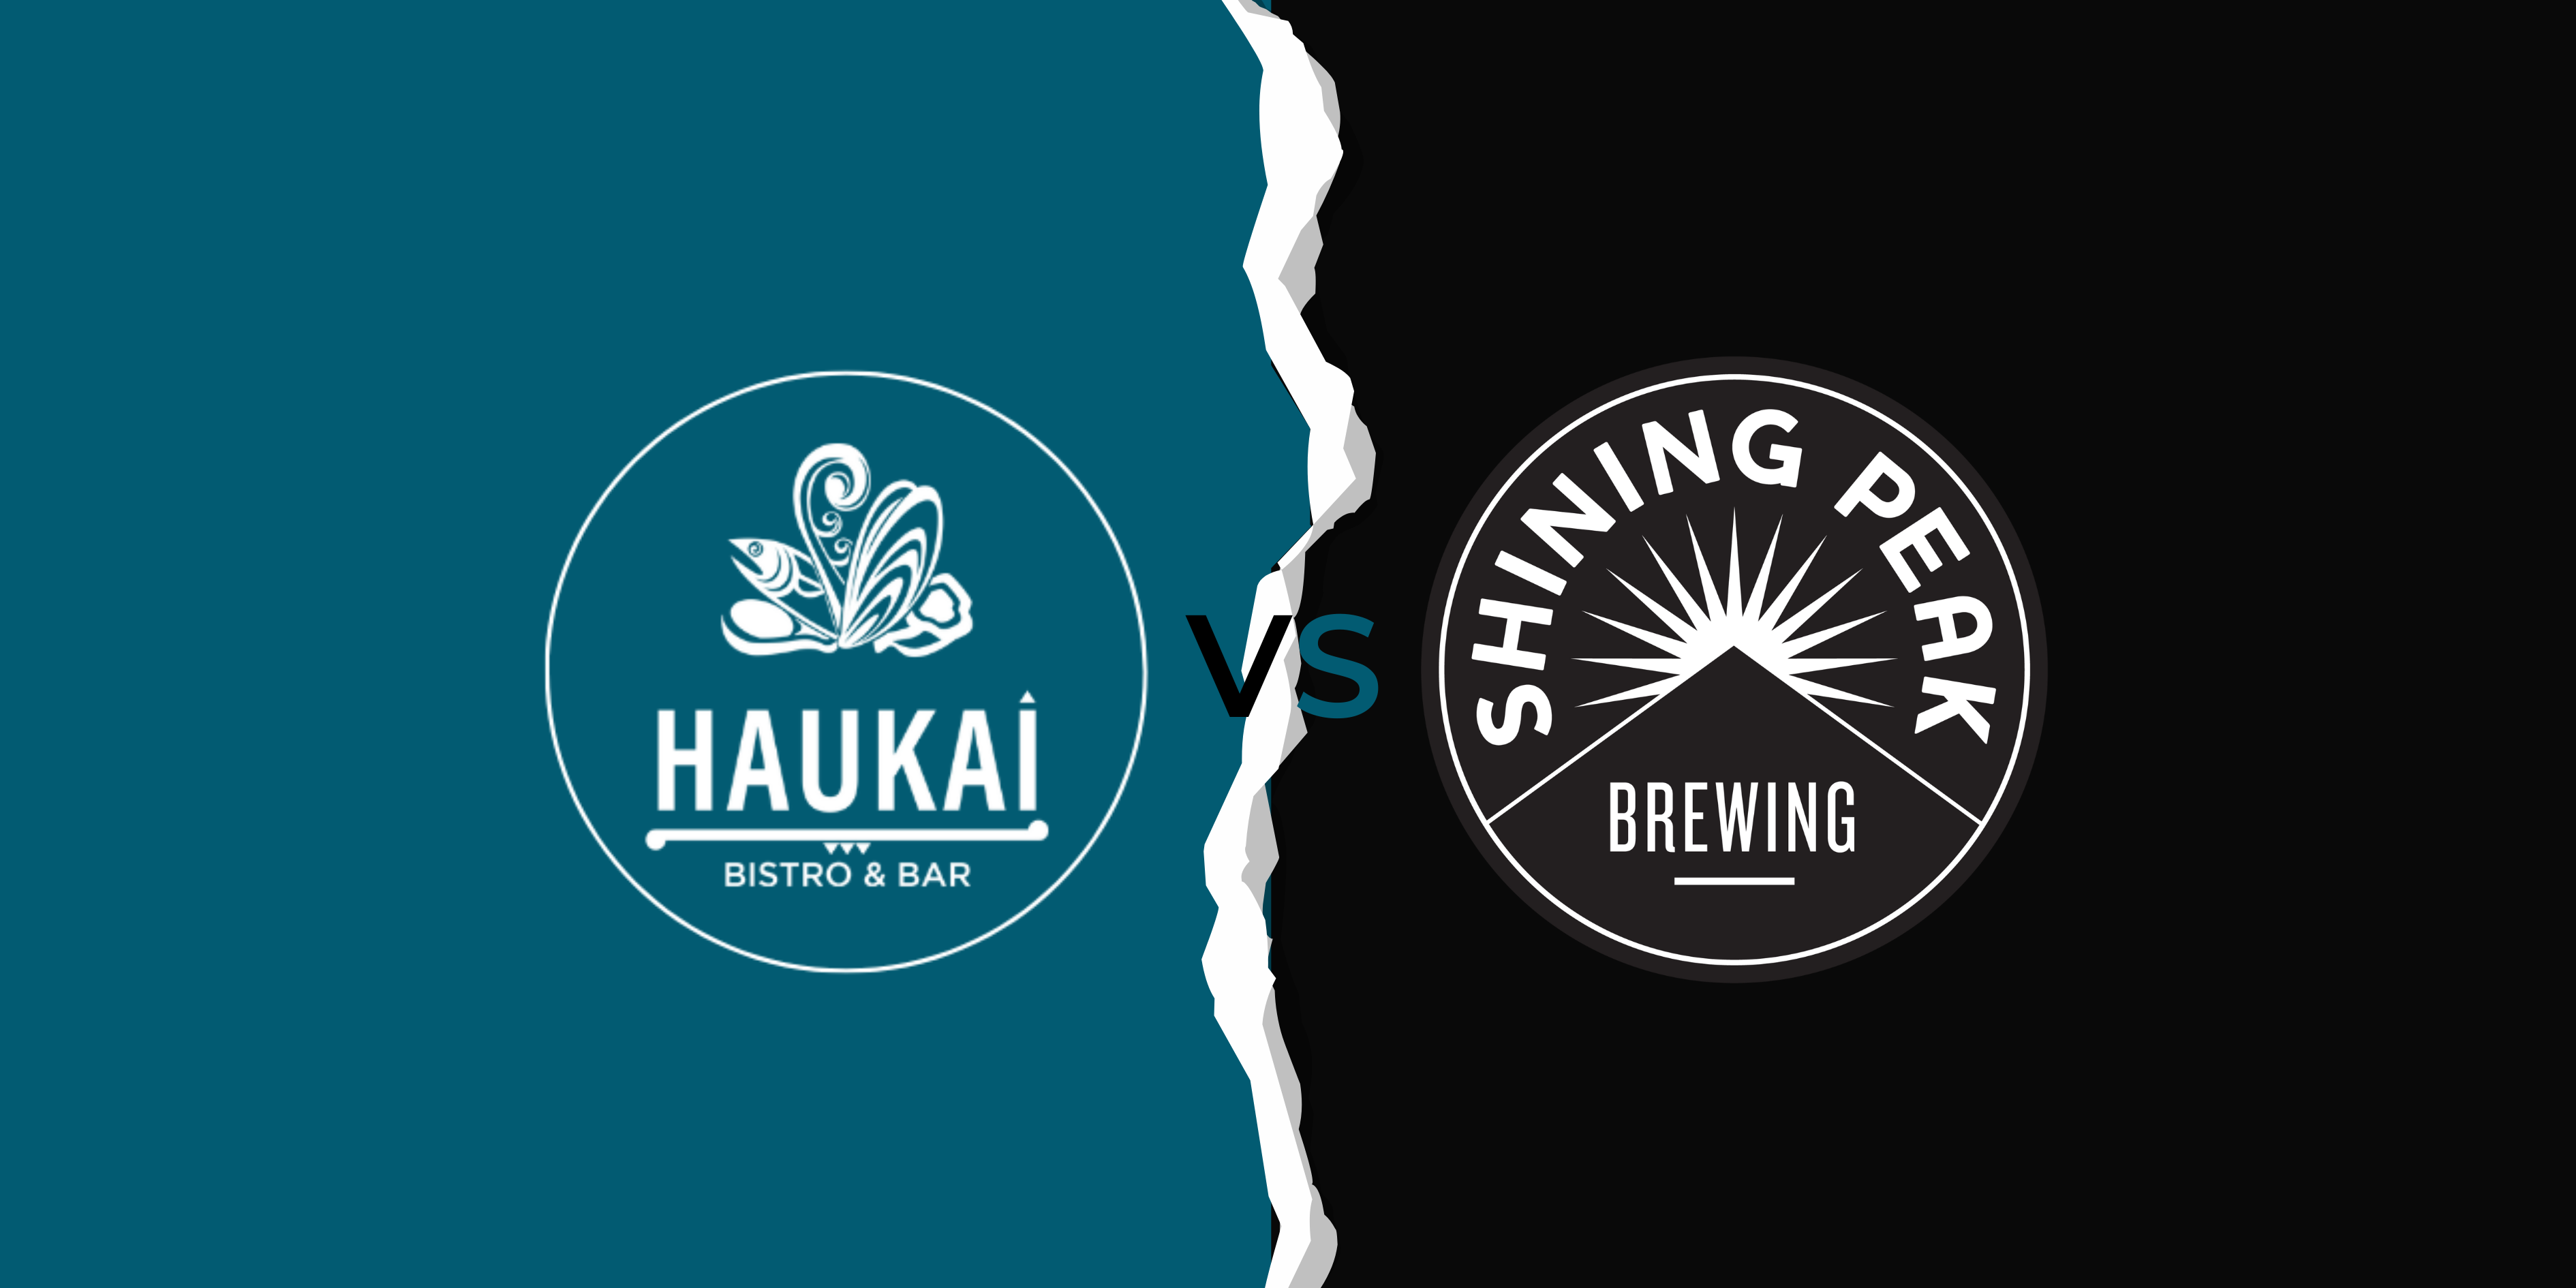 Haukai vs Shining Peak